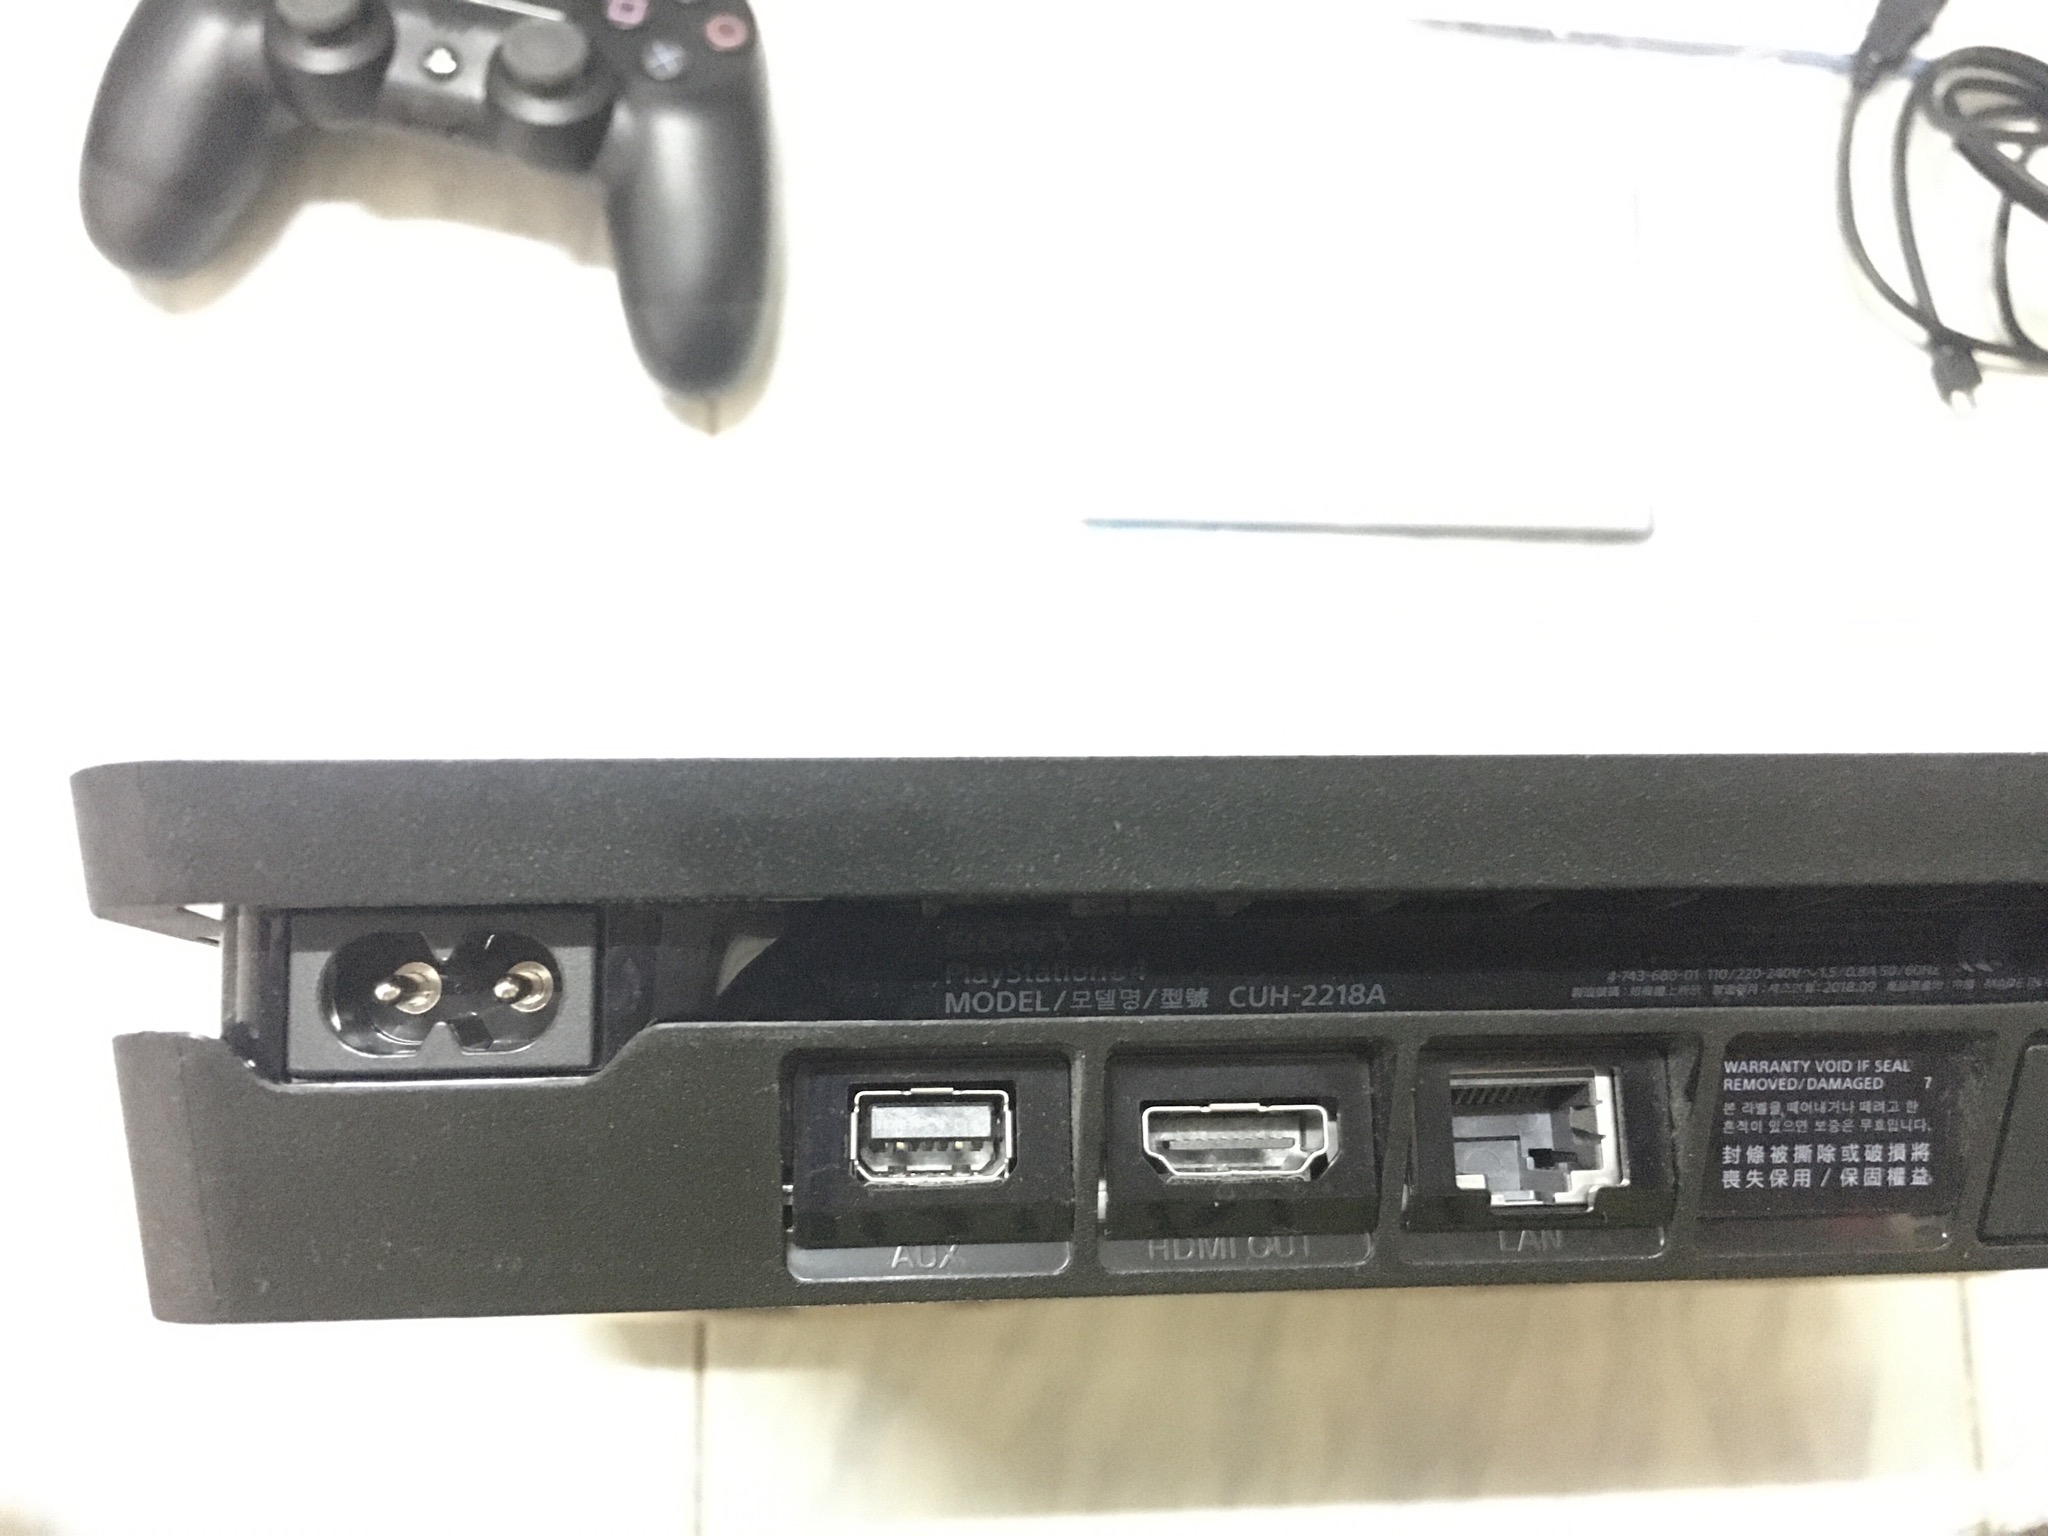 PS4 slim CUH-2218A 500GB สีดำ Jetblack อายุไม่ถึงปี - Console Thai